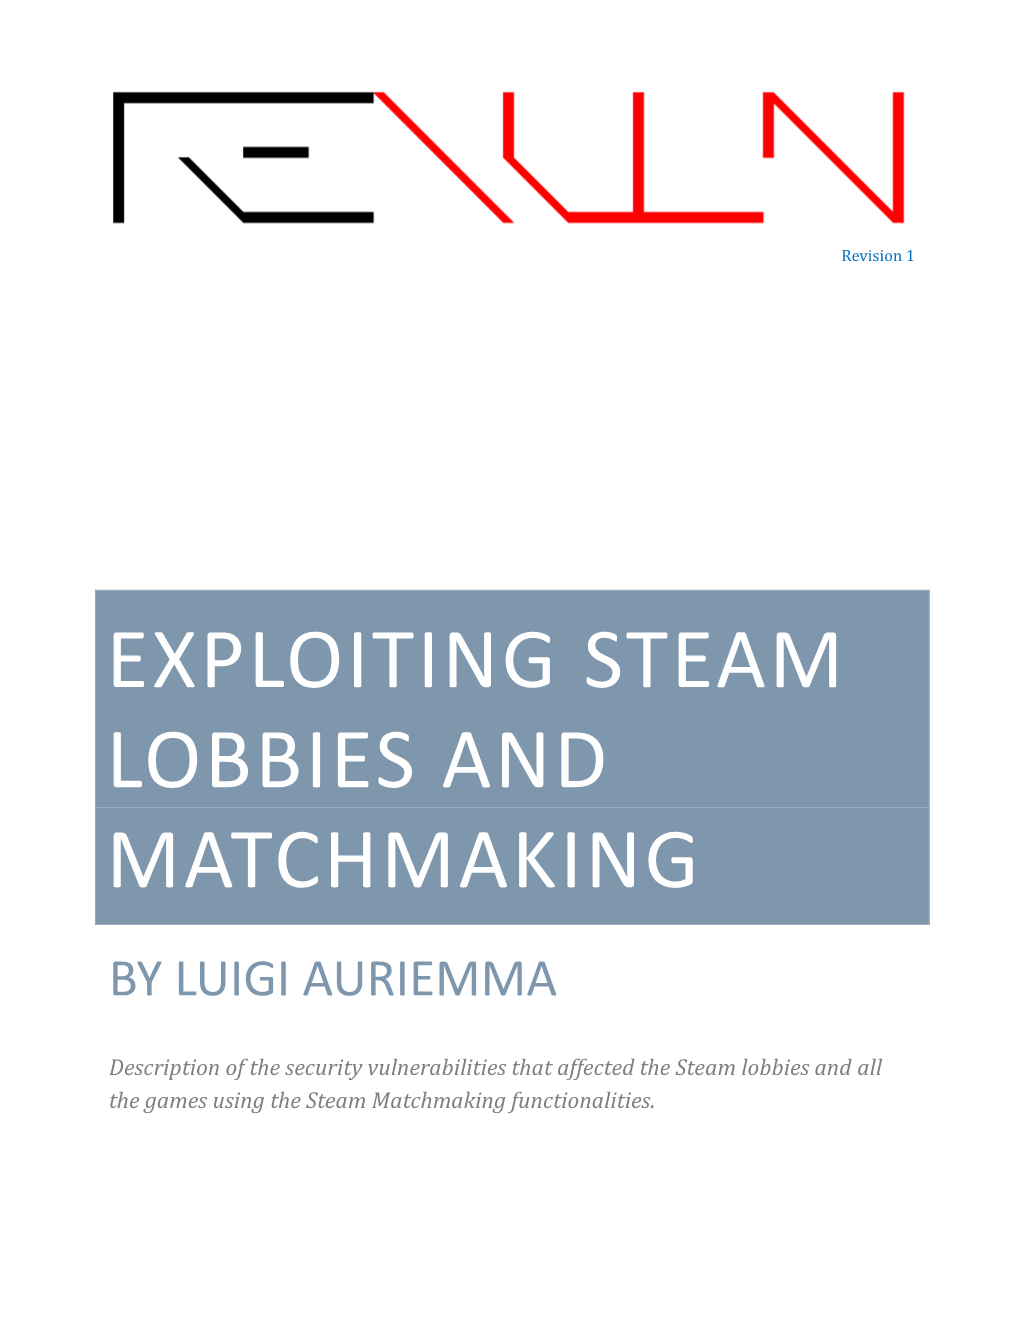 Exploiting Steam Lobbies and Matchmaking by Luigi Auriemma